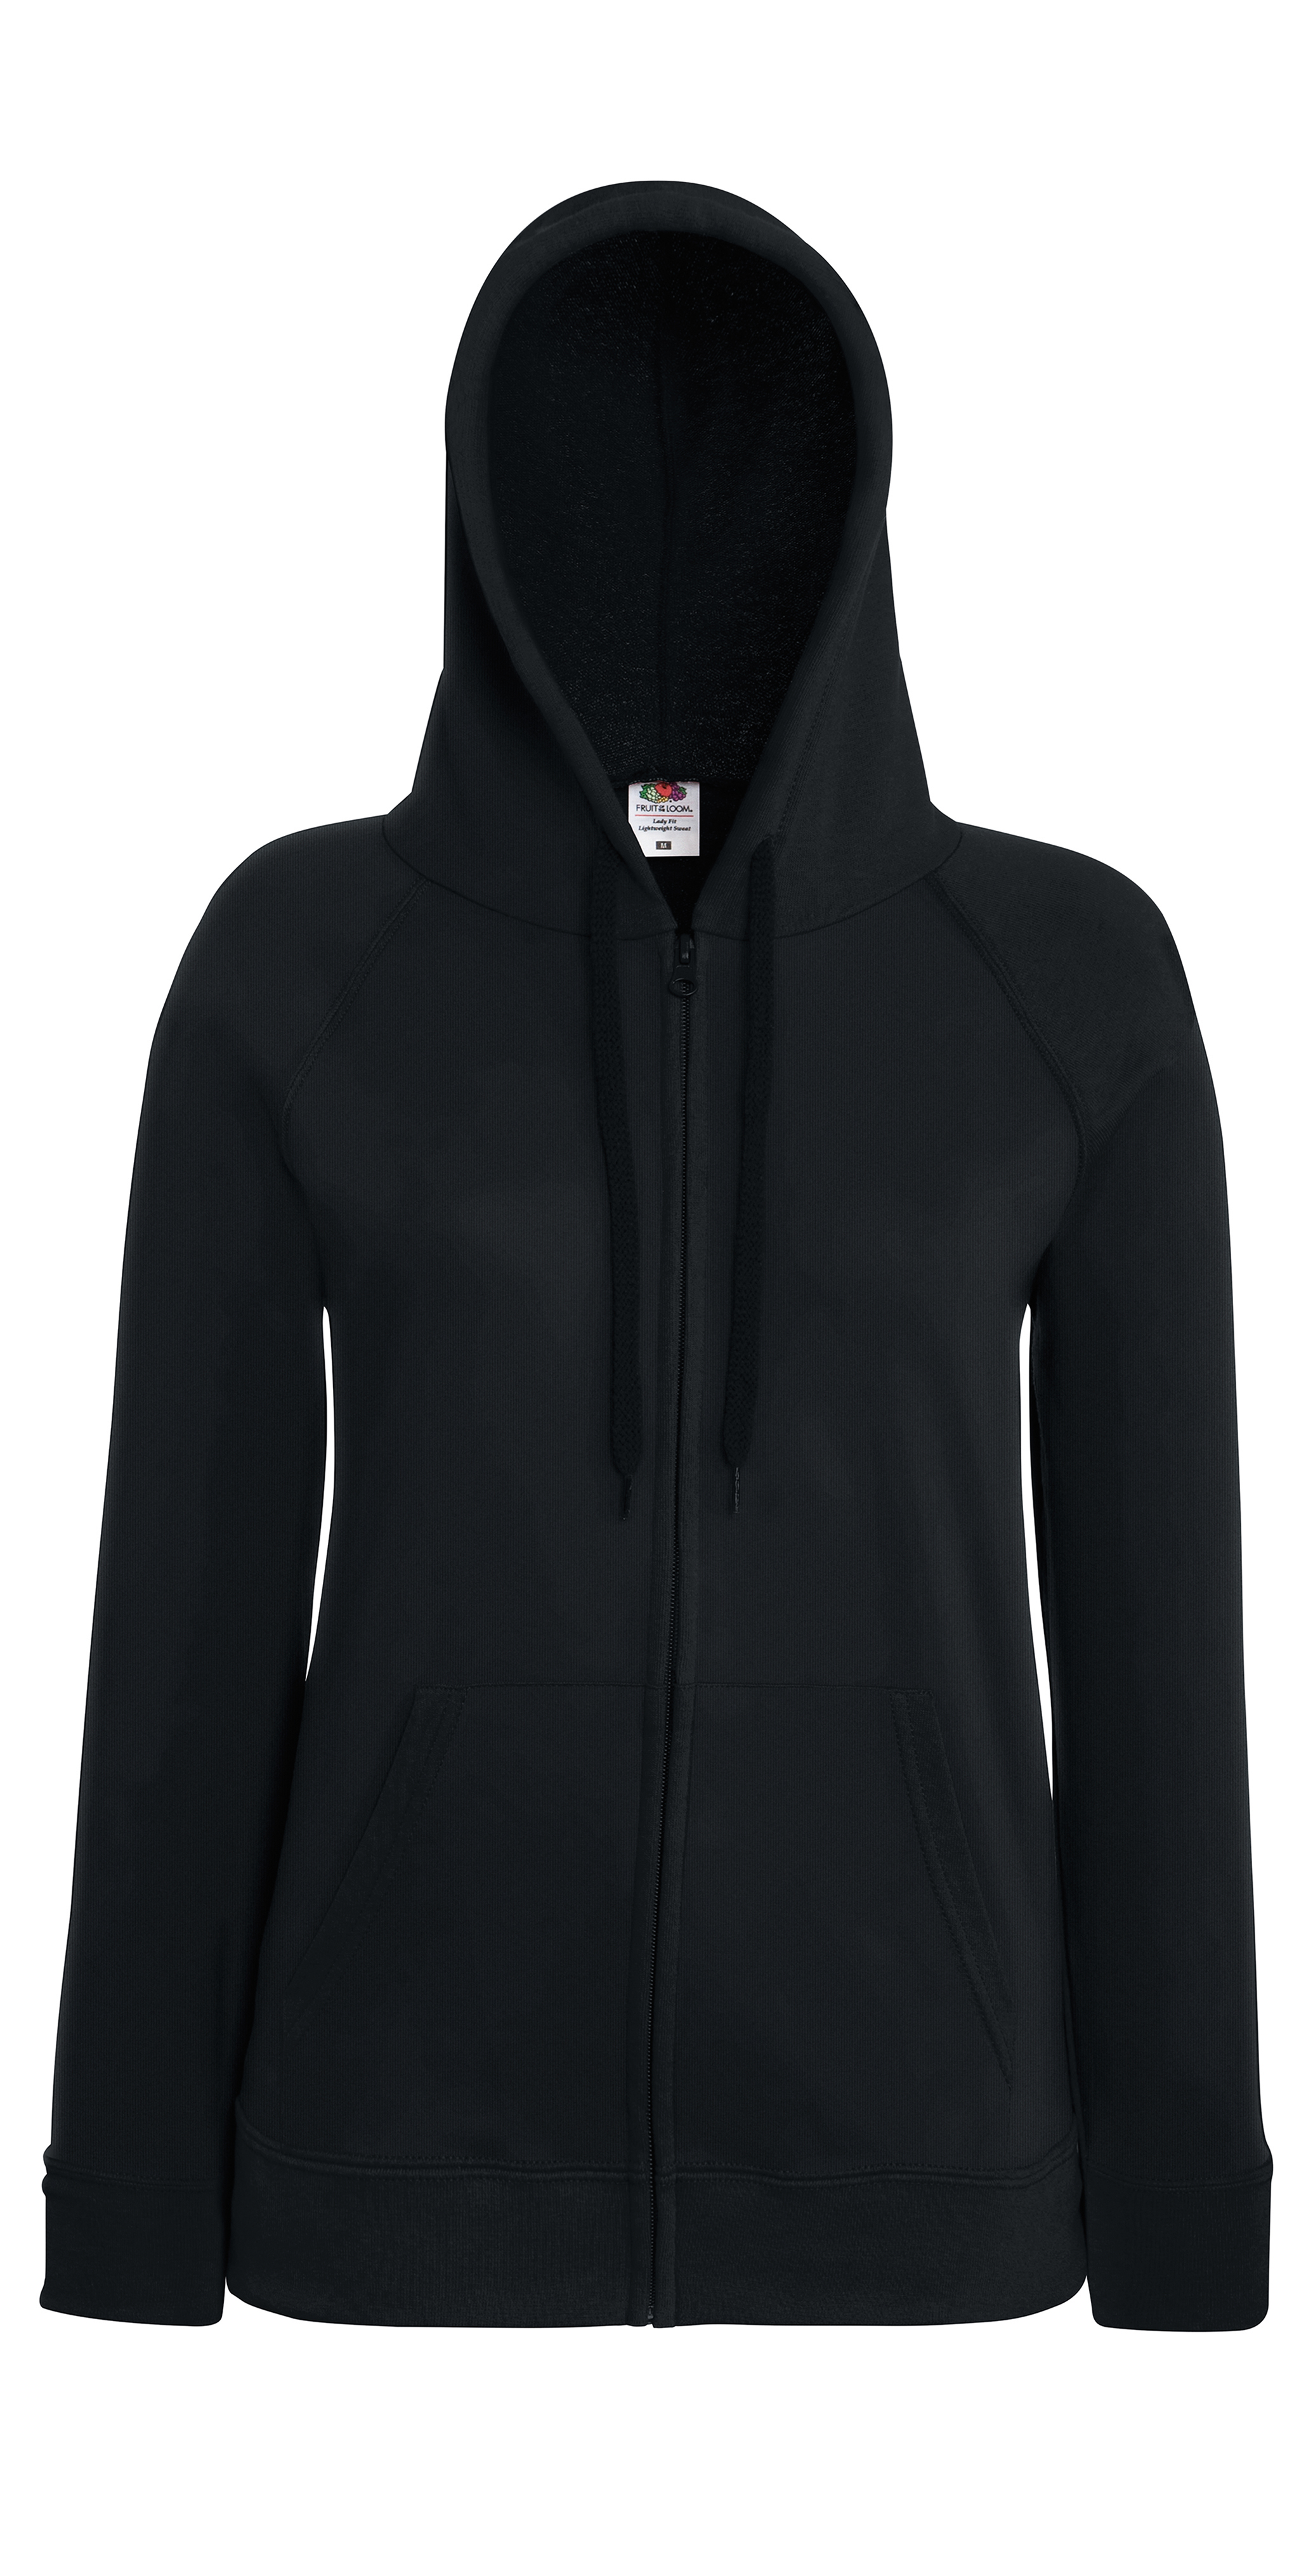 ax-httpswebsystems.s3.amazonaws.comtmp_for_downloadfruit-of-the-loom-womens-lightweight-hooded-sweatshirt-jacket-black.jpeg